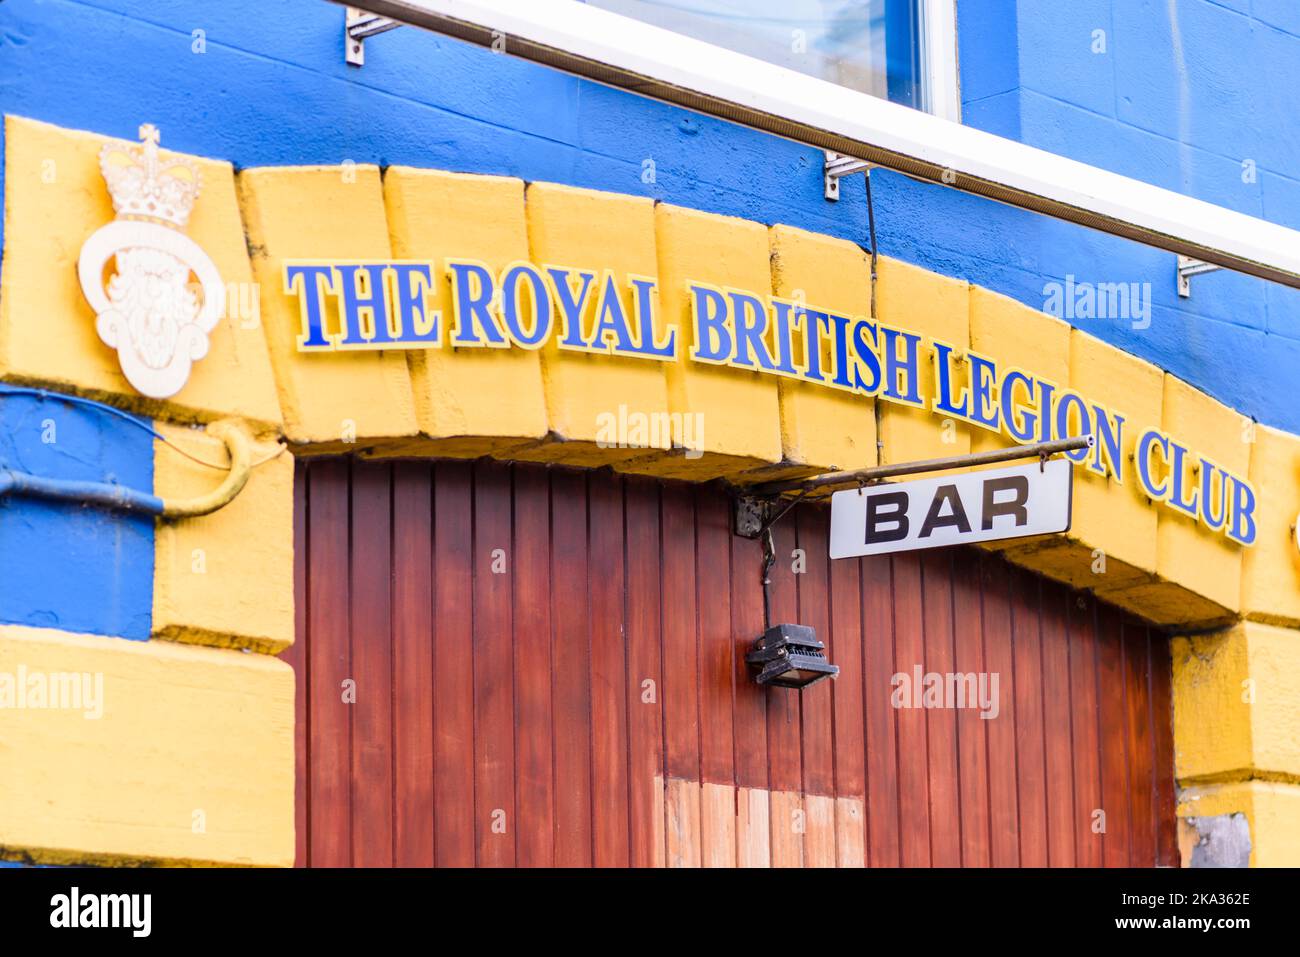 Sign above the entrance to a Royal British Legion club saying 'BAR'. Castlederg, Northern Ireland Stock Photo